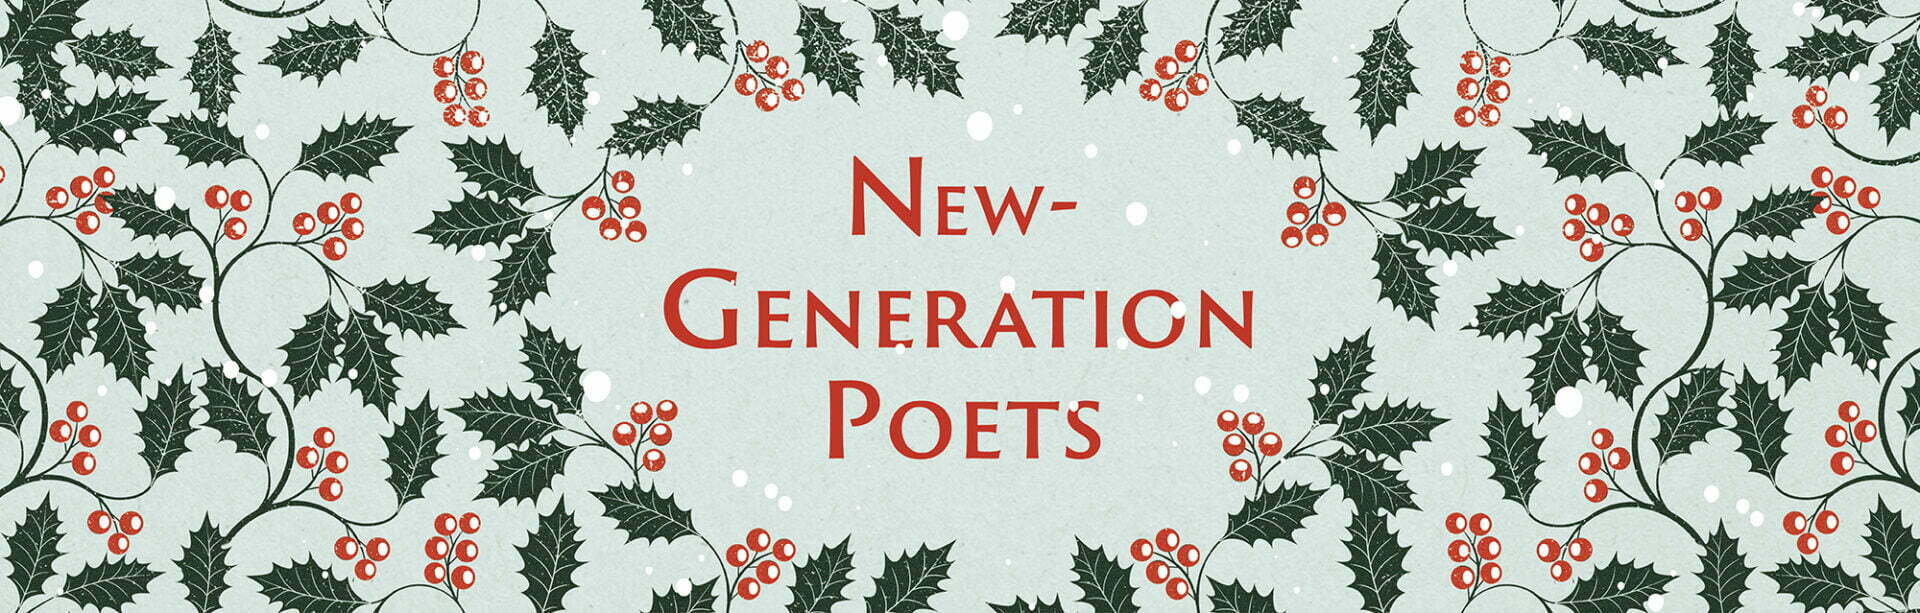 https://faber.wp.dev.diffusion.digital/wp-content/uploads/2021/11/New-Generation-Poets-1920x613.jpg